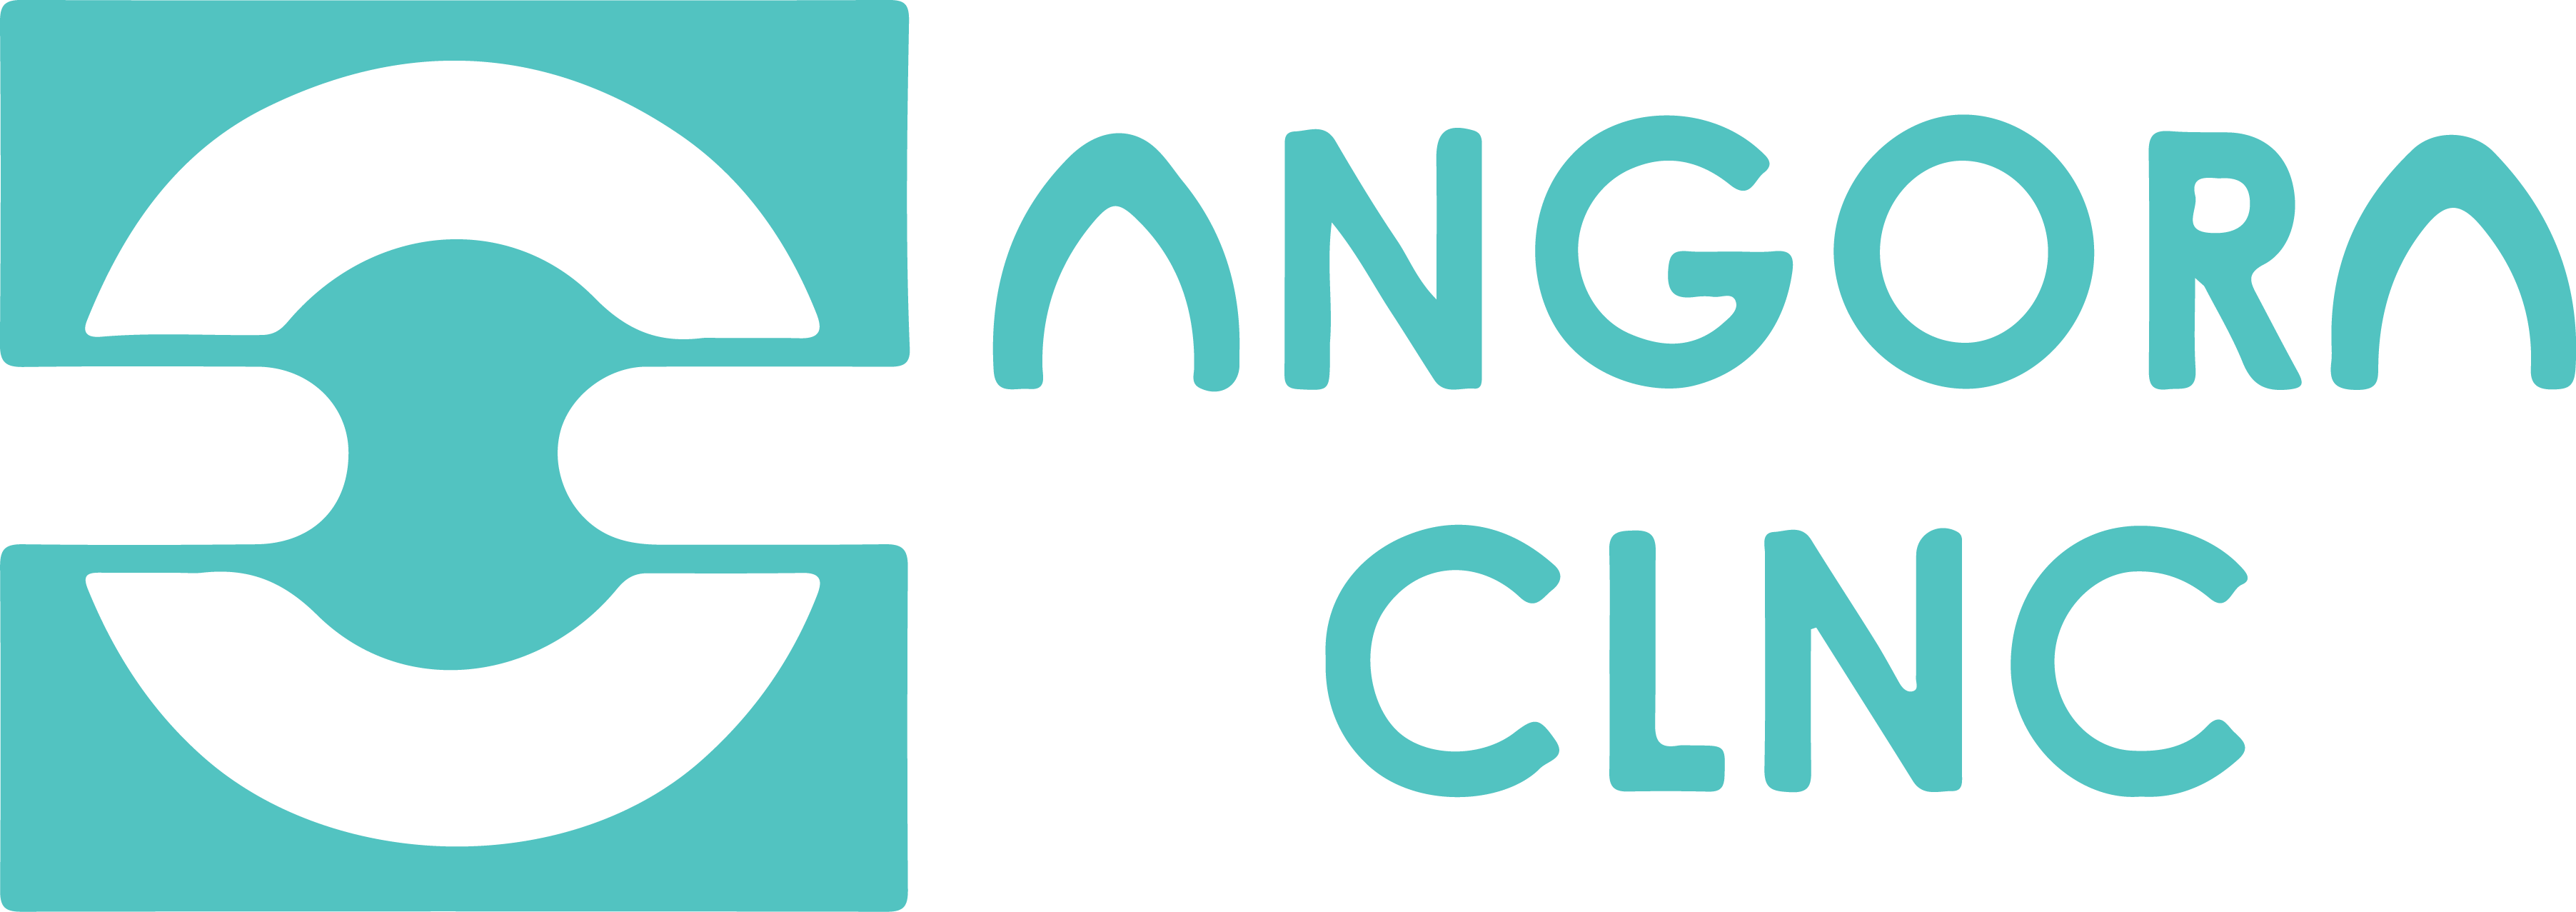 Angora Clnc